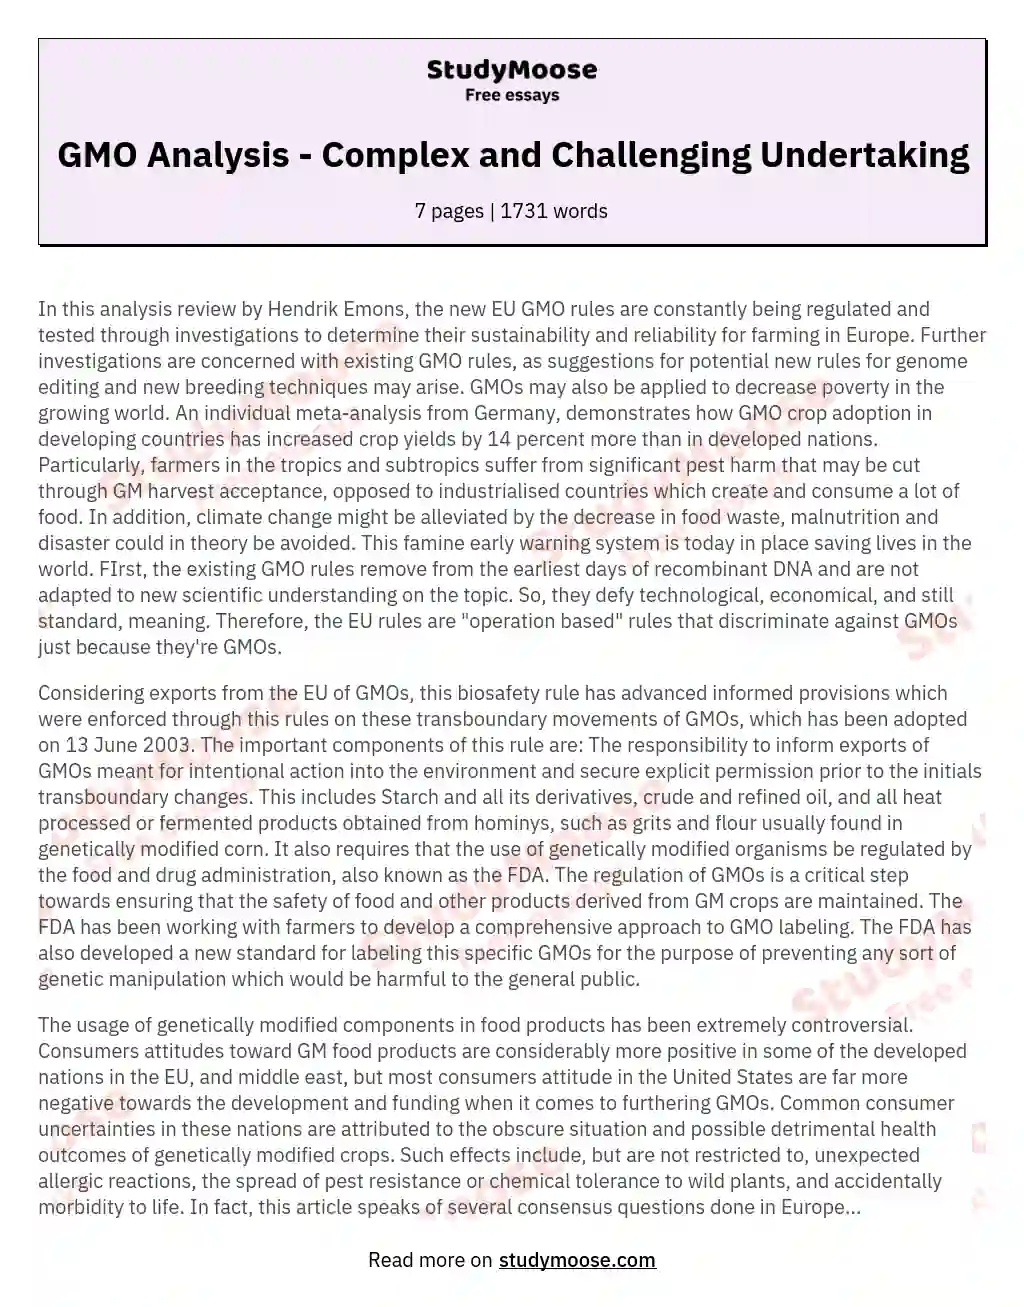 GMO Analysis - Complex and Challenging Undertaking essay